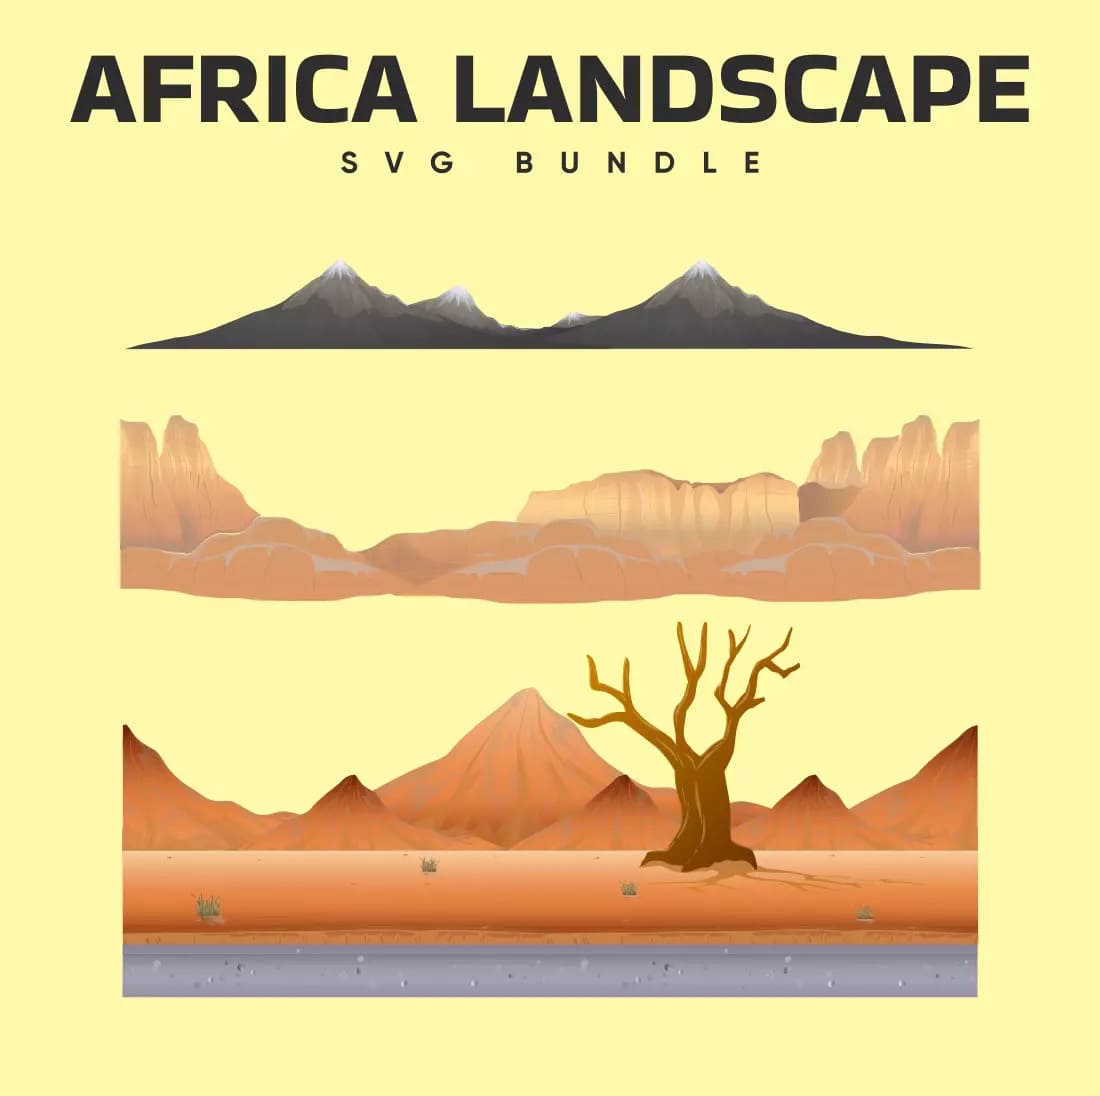 Africa Landascape SVG Bundle Preview.